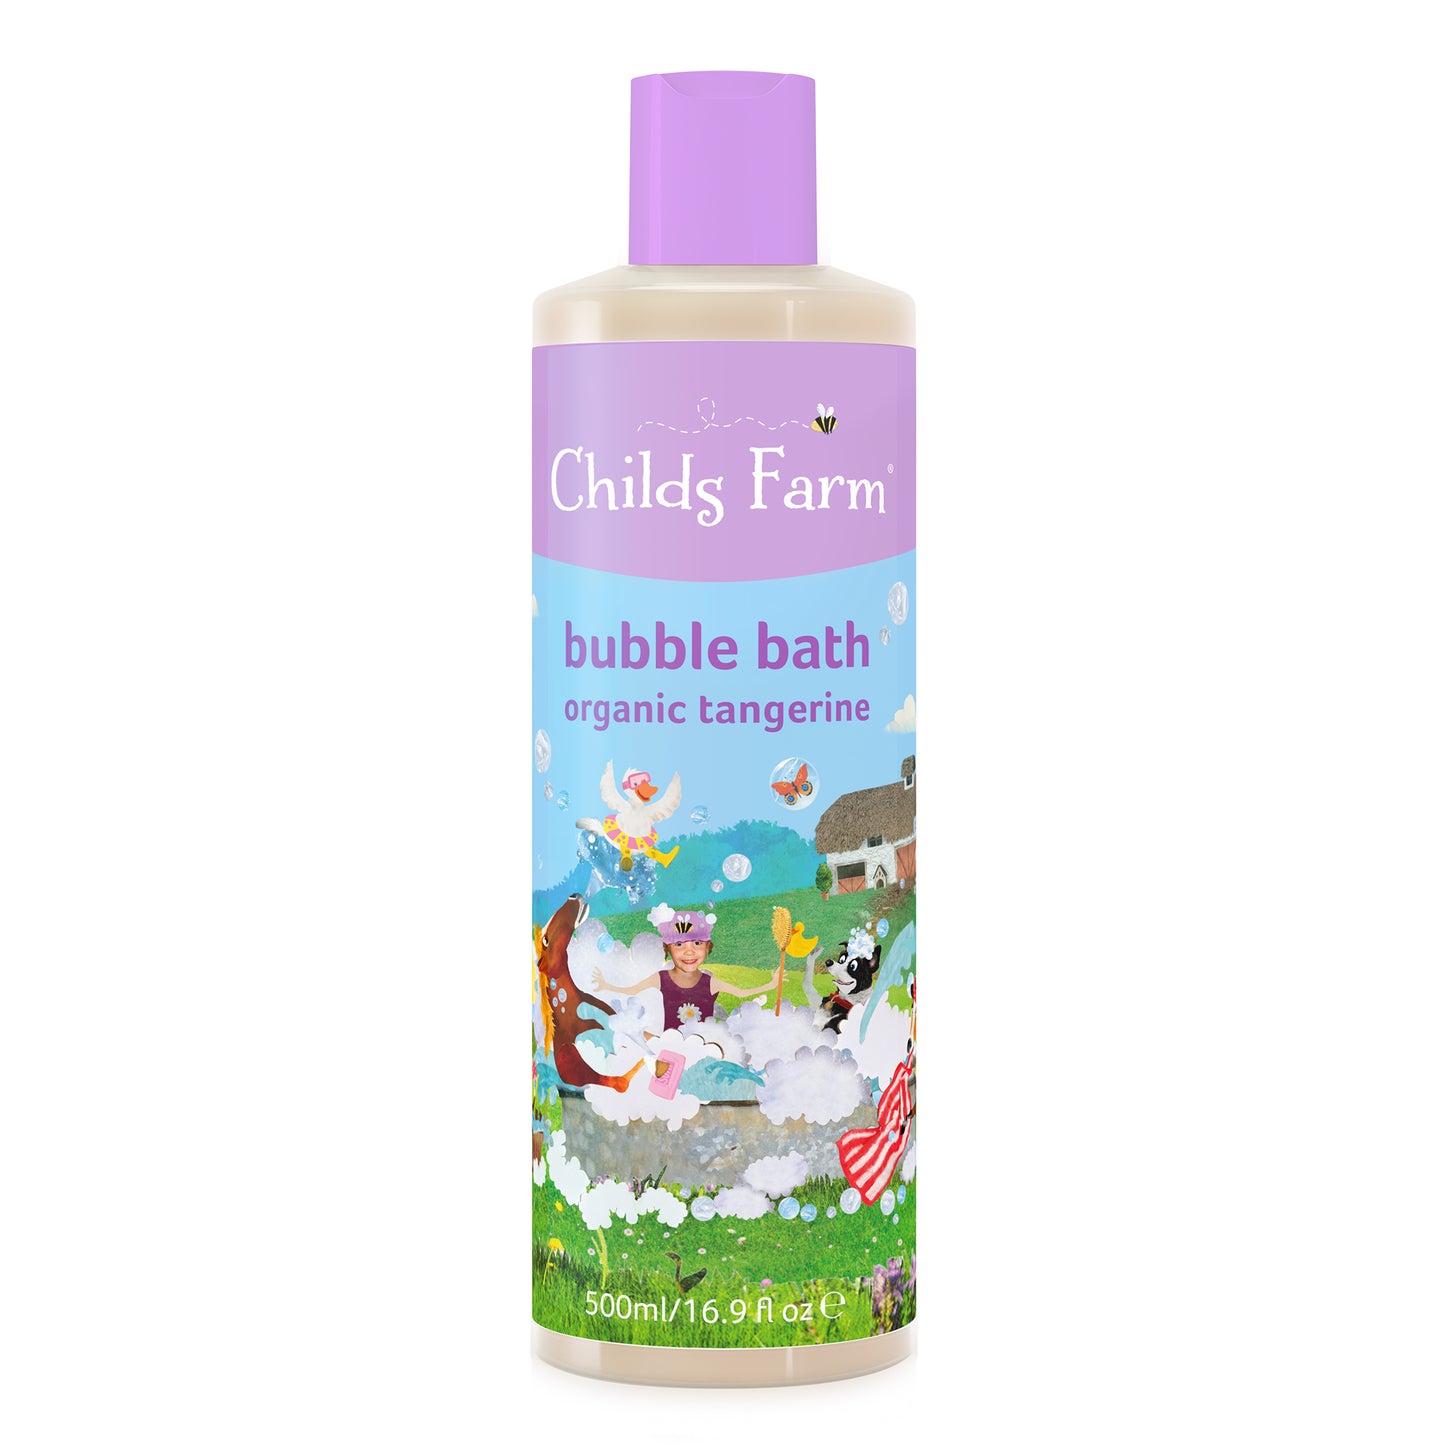 Childs Farm Organic Tangerine Bubble Bath, 500ml